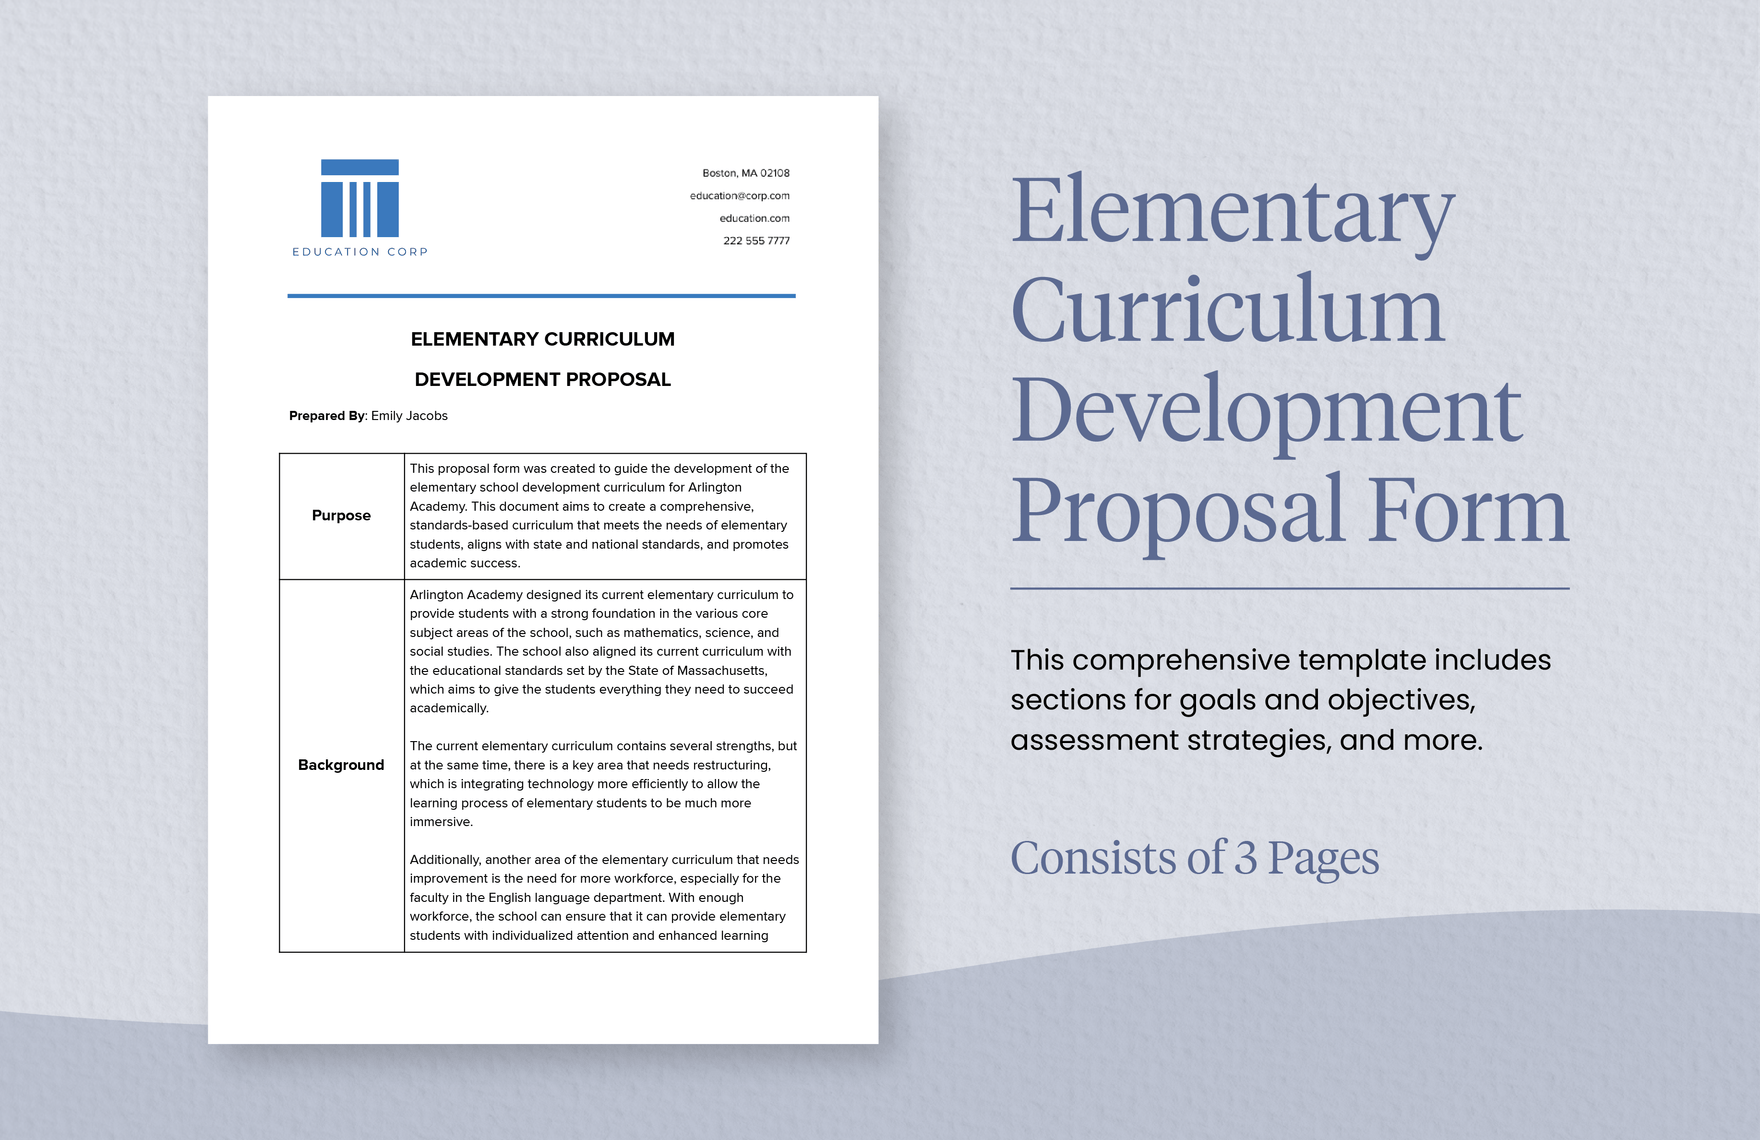 Elementary Curriculum Development Proposal Form in Word, Google Docs